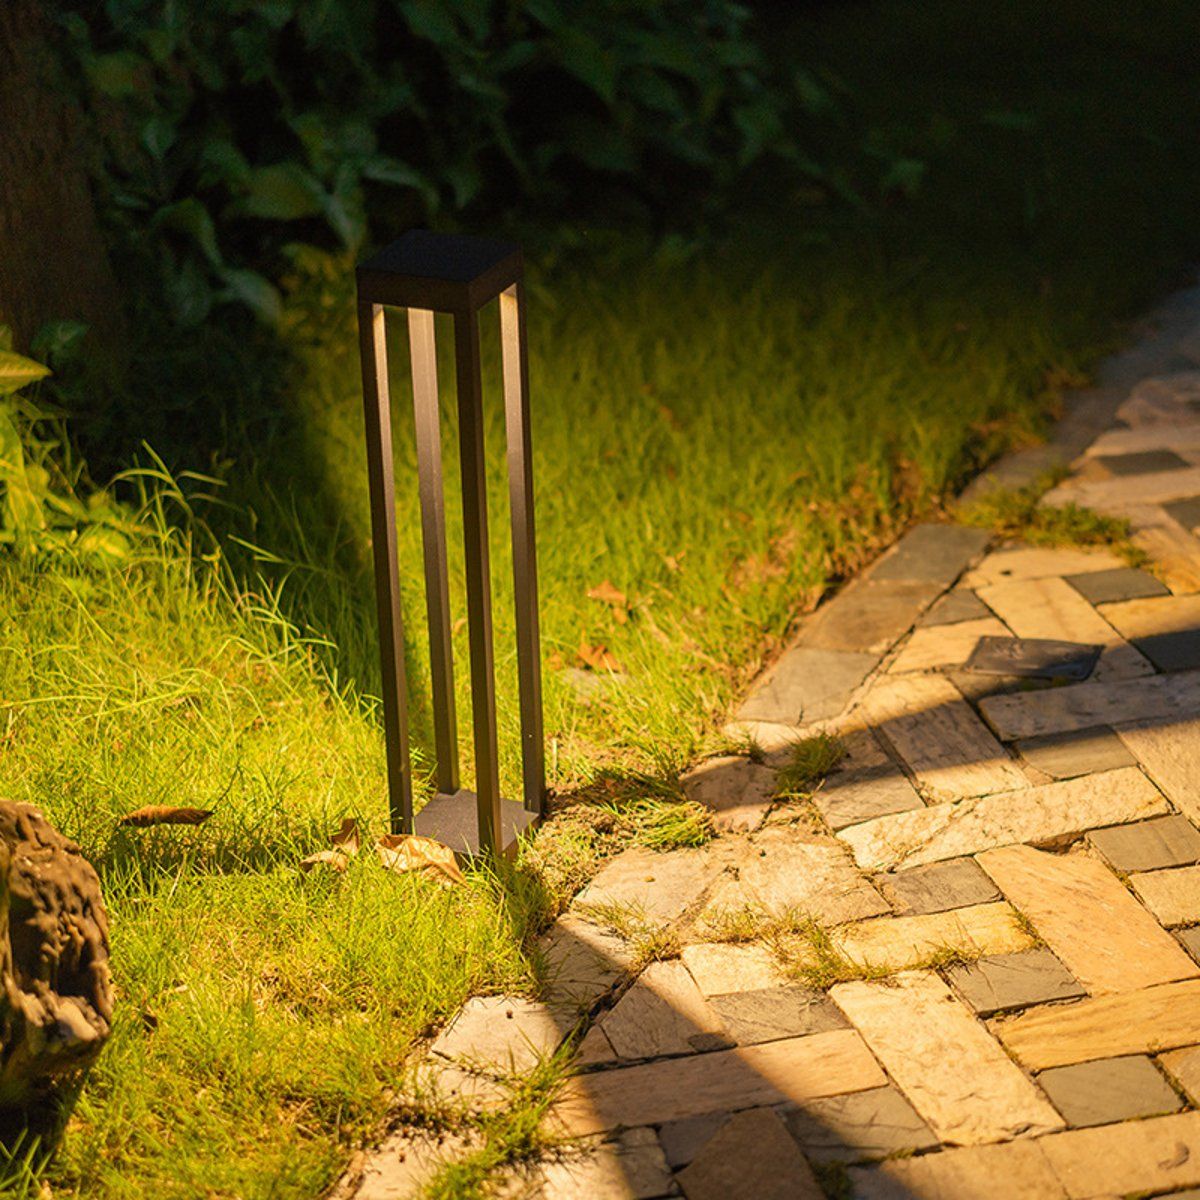 7W-LED-Lawn-Light-Outdoor-Pathway-Garden-Walkway-Decorative-Lighting-Lamp-40cm-1678249